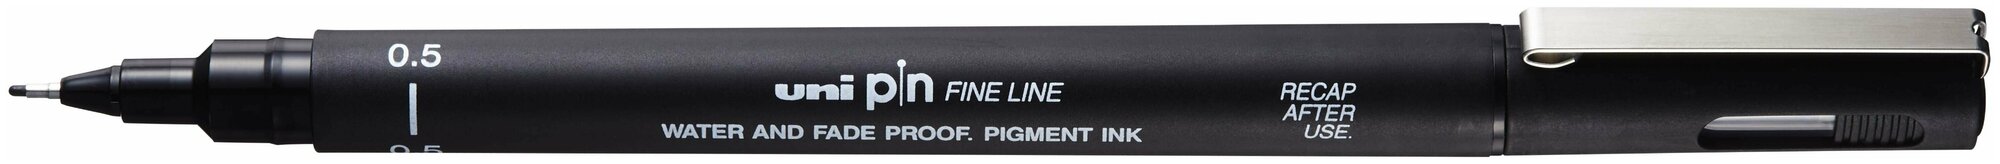 Линер PIN 05 - 200(S), чёрный, 0.5 мм